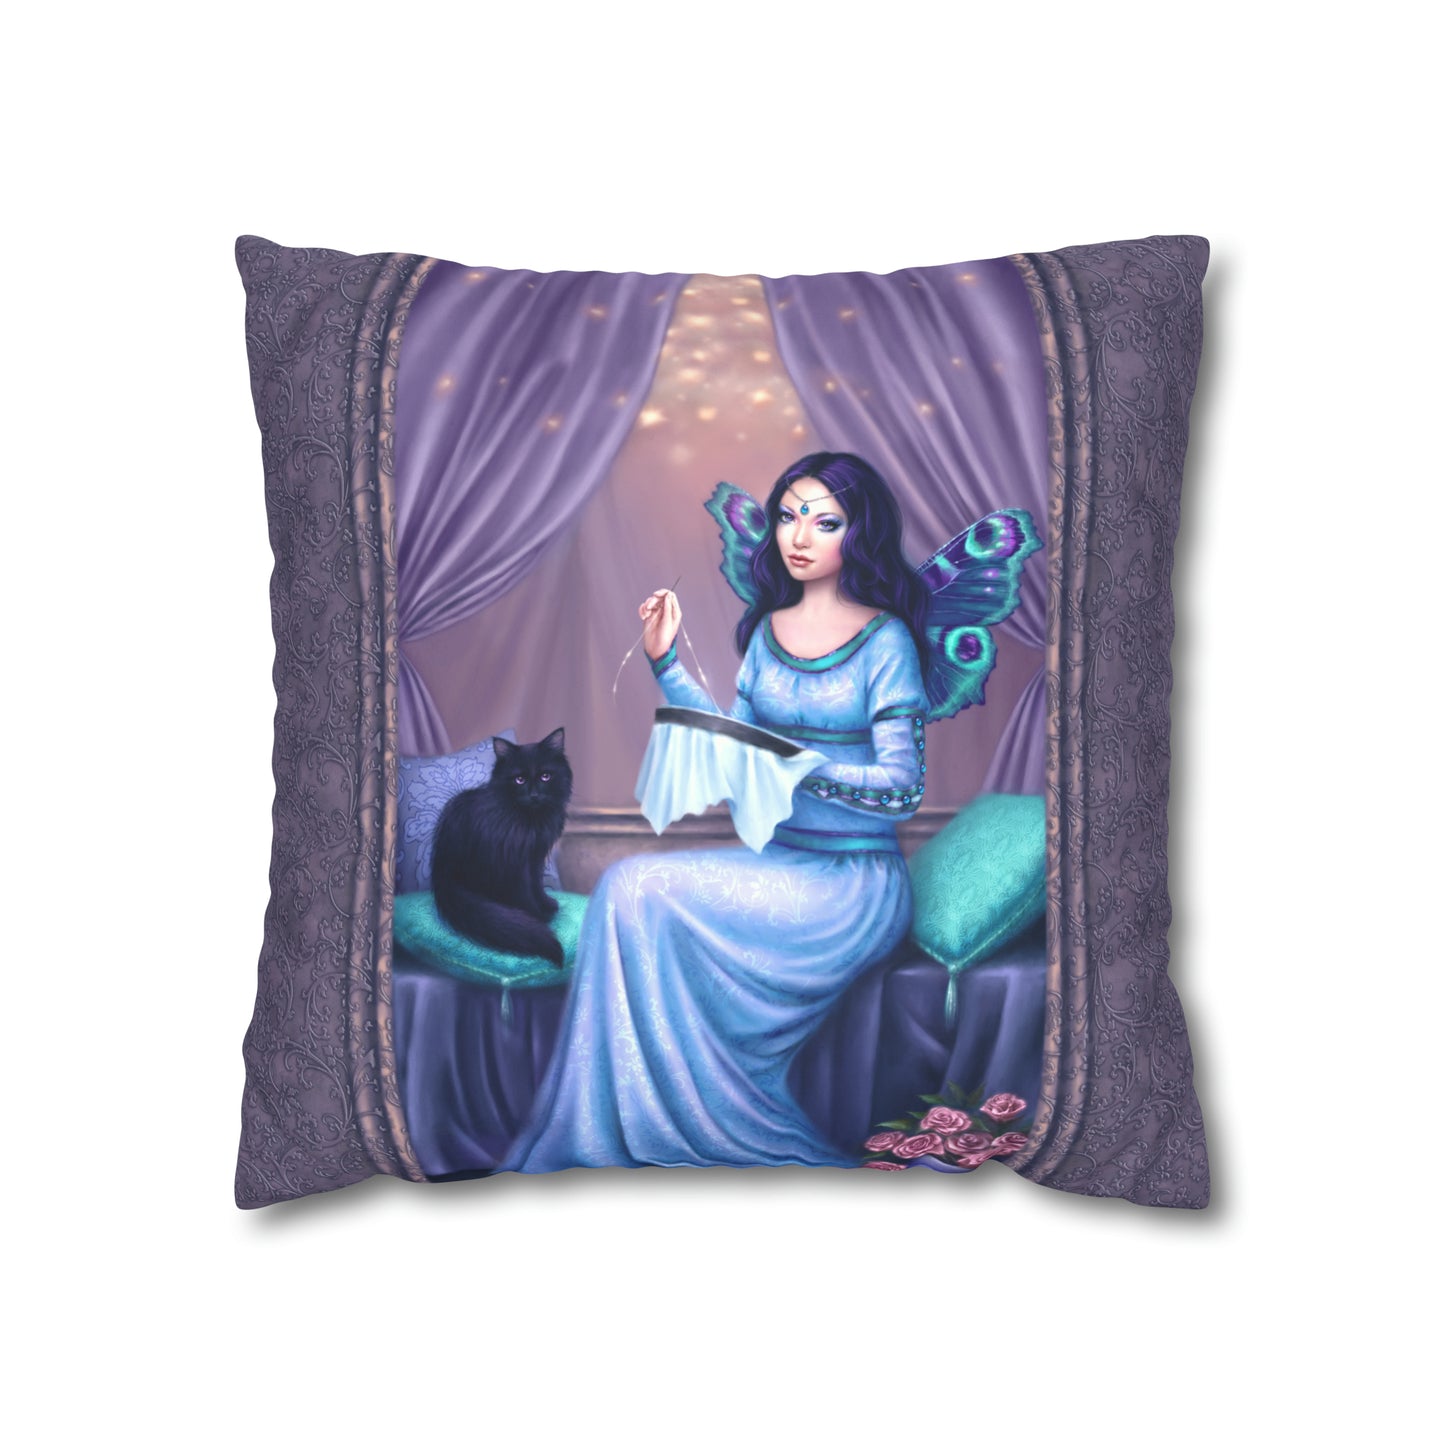 Throw Pillow Cover - Ariadne